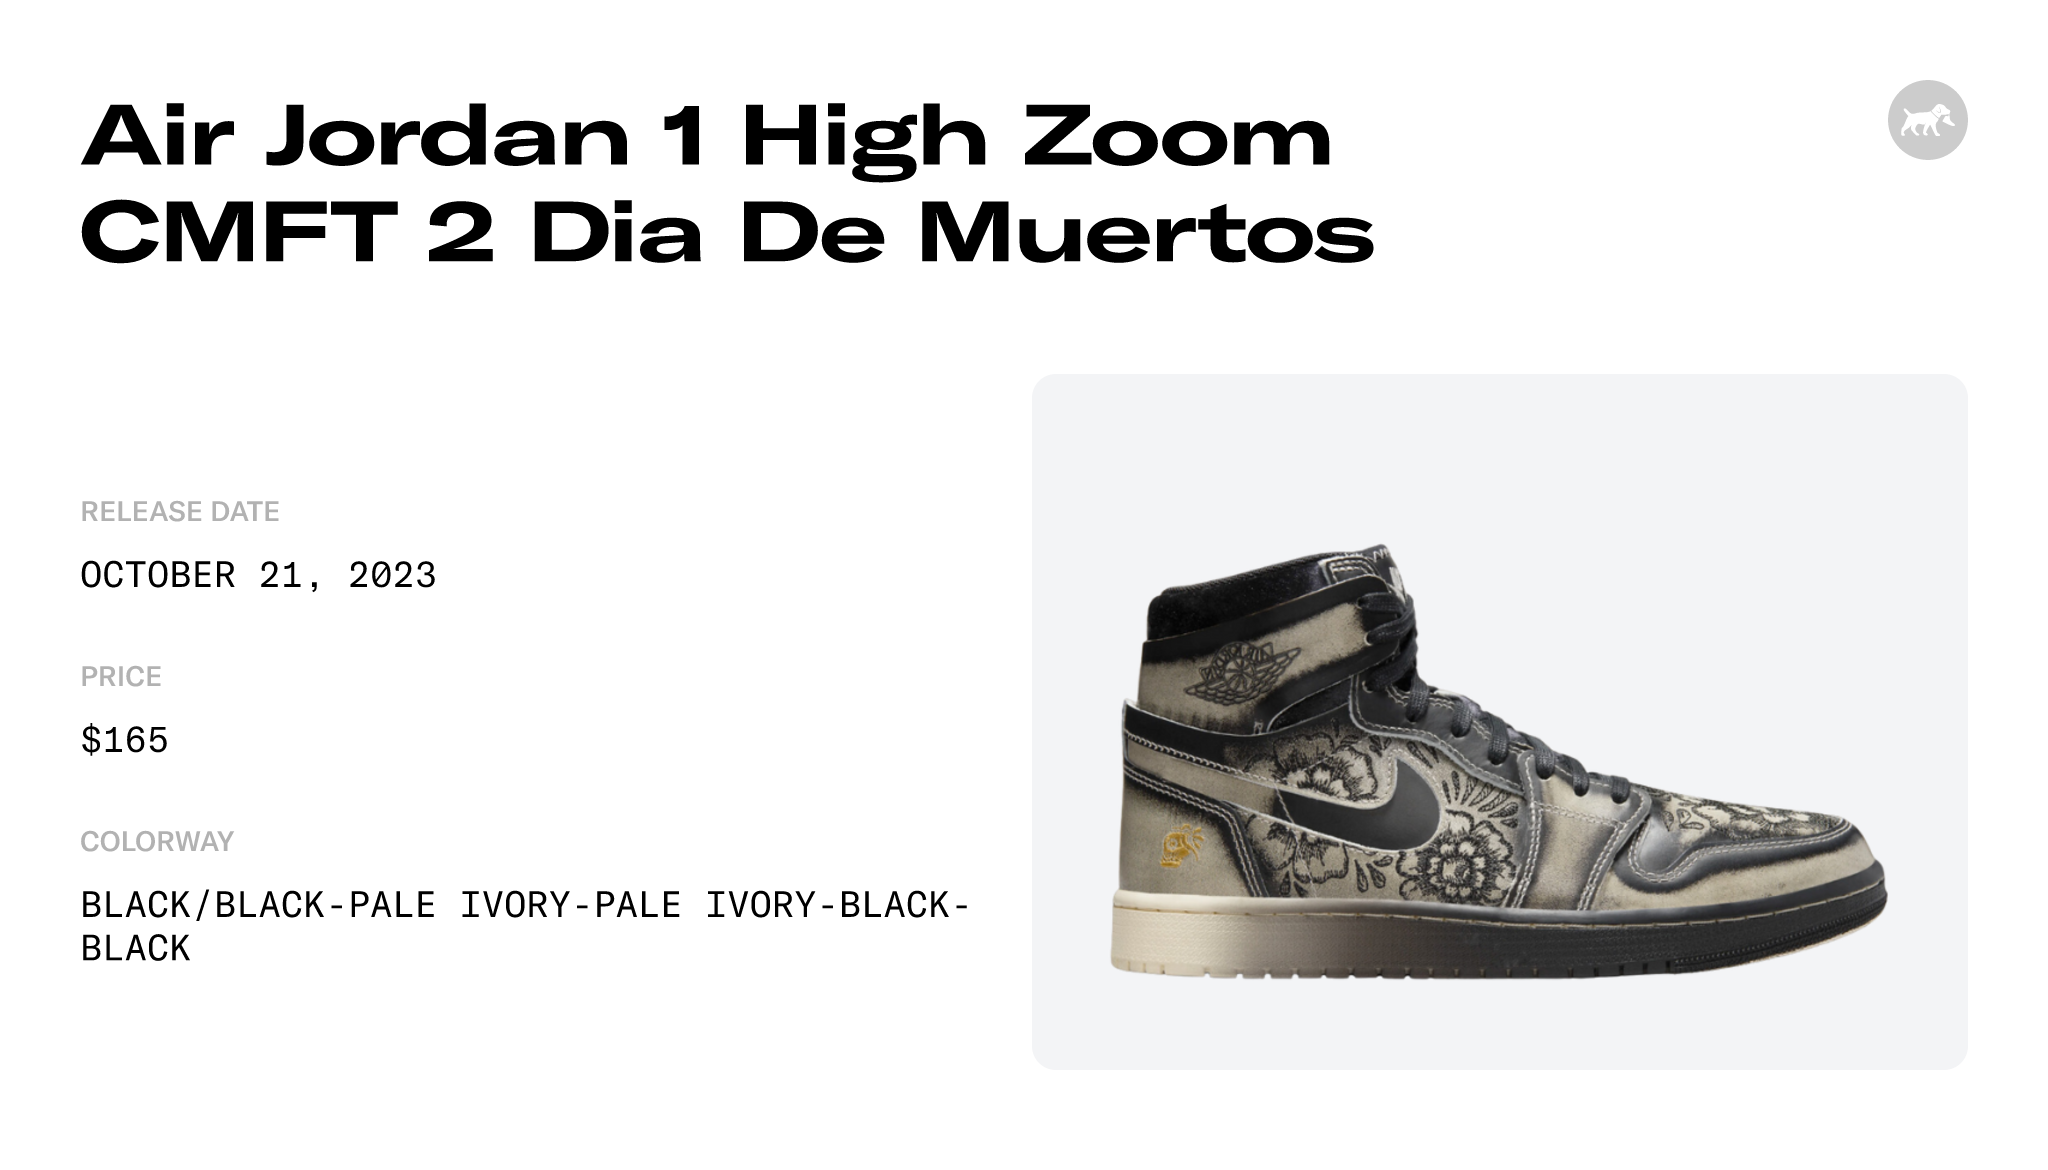 The Air Jordan 1 High Zoom CMFT 2 Día De Muertos Releases October 21